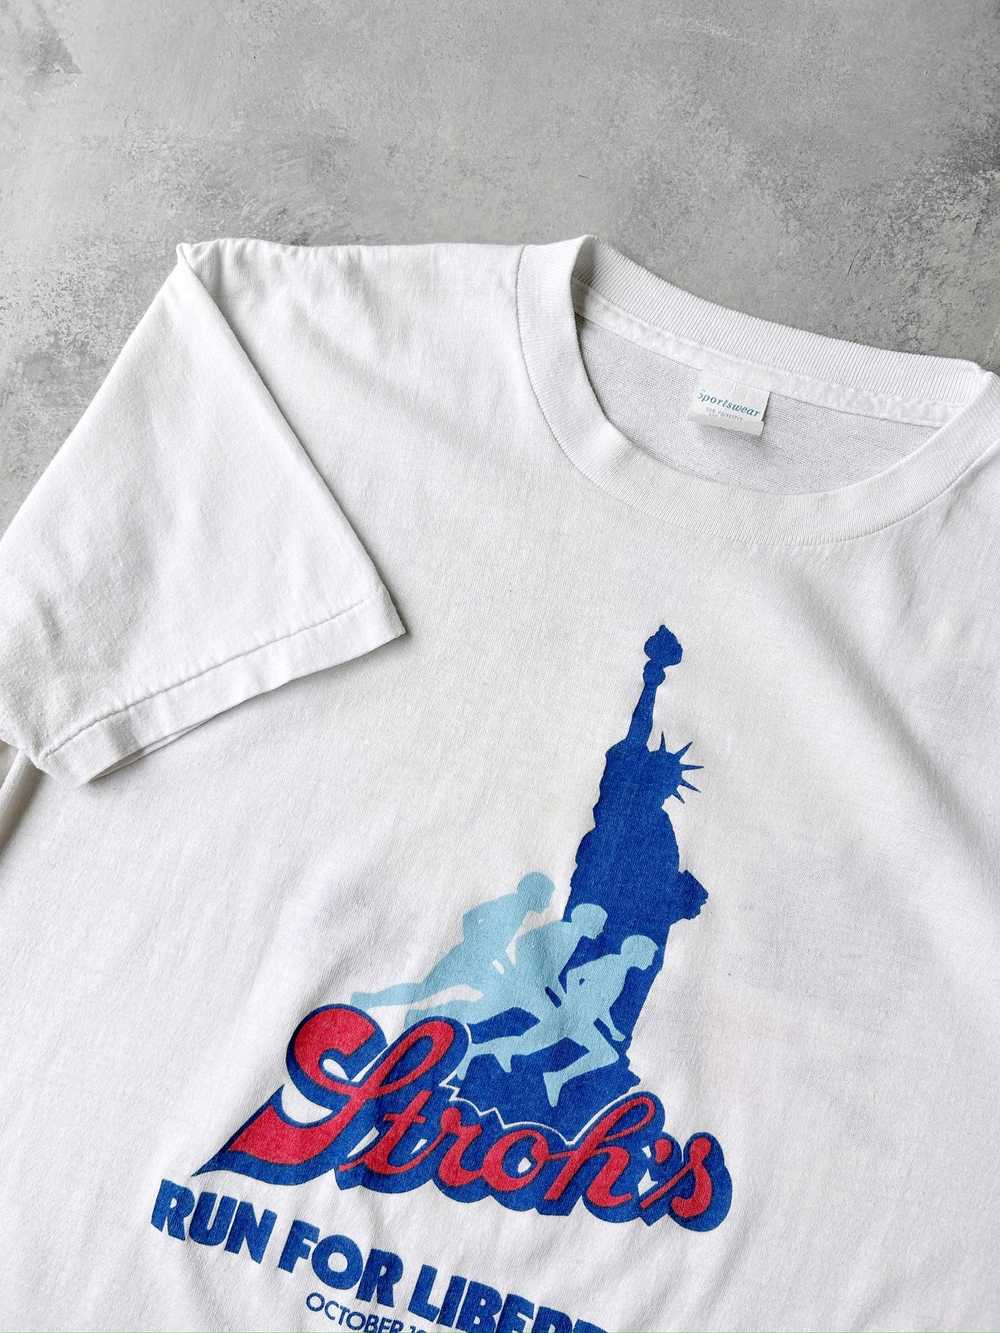 Stroh's Run for Liberty I T-Shirt '84 - Medium / … - image 3